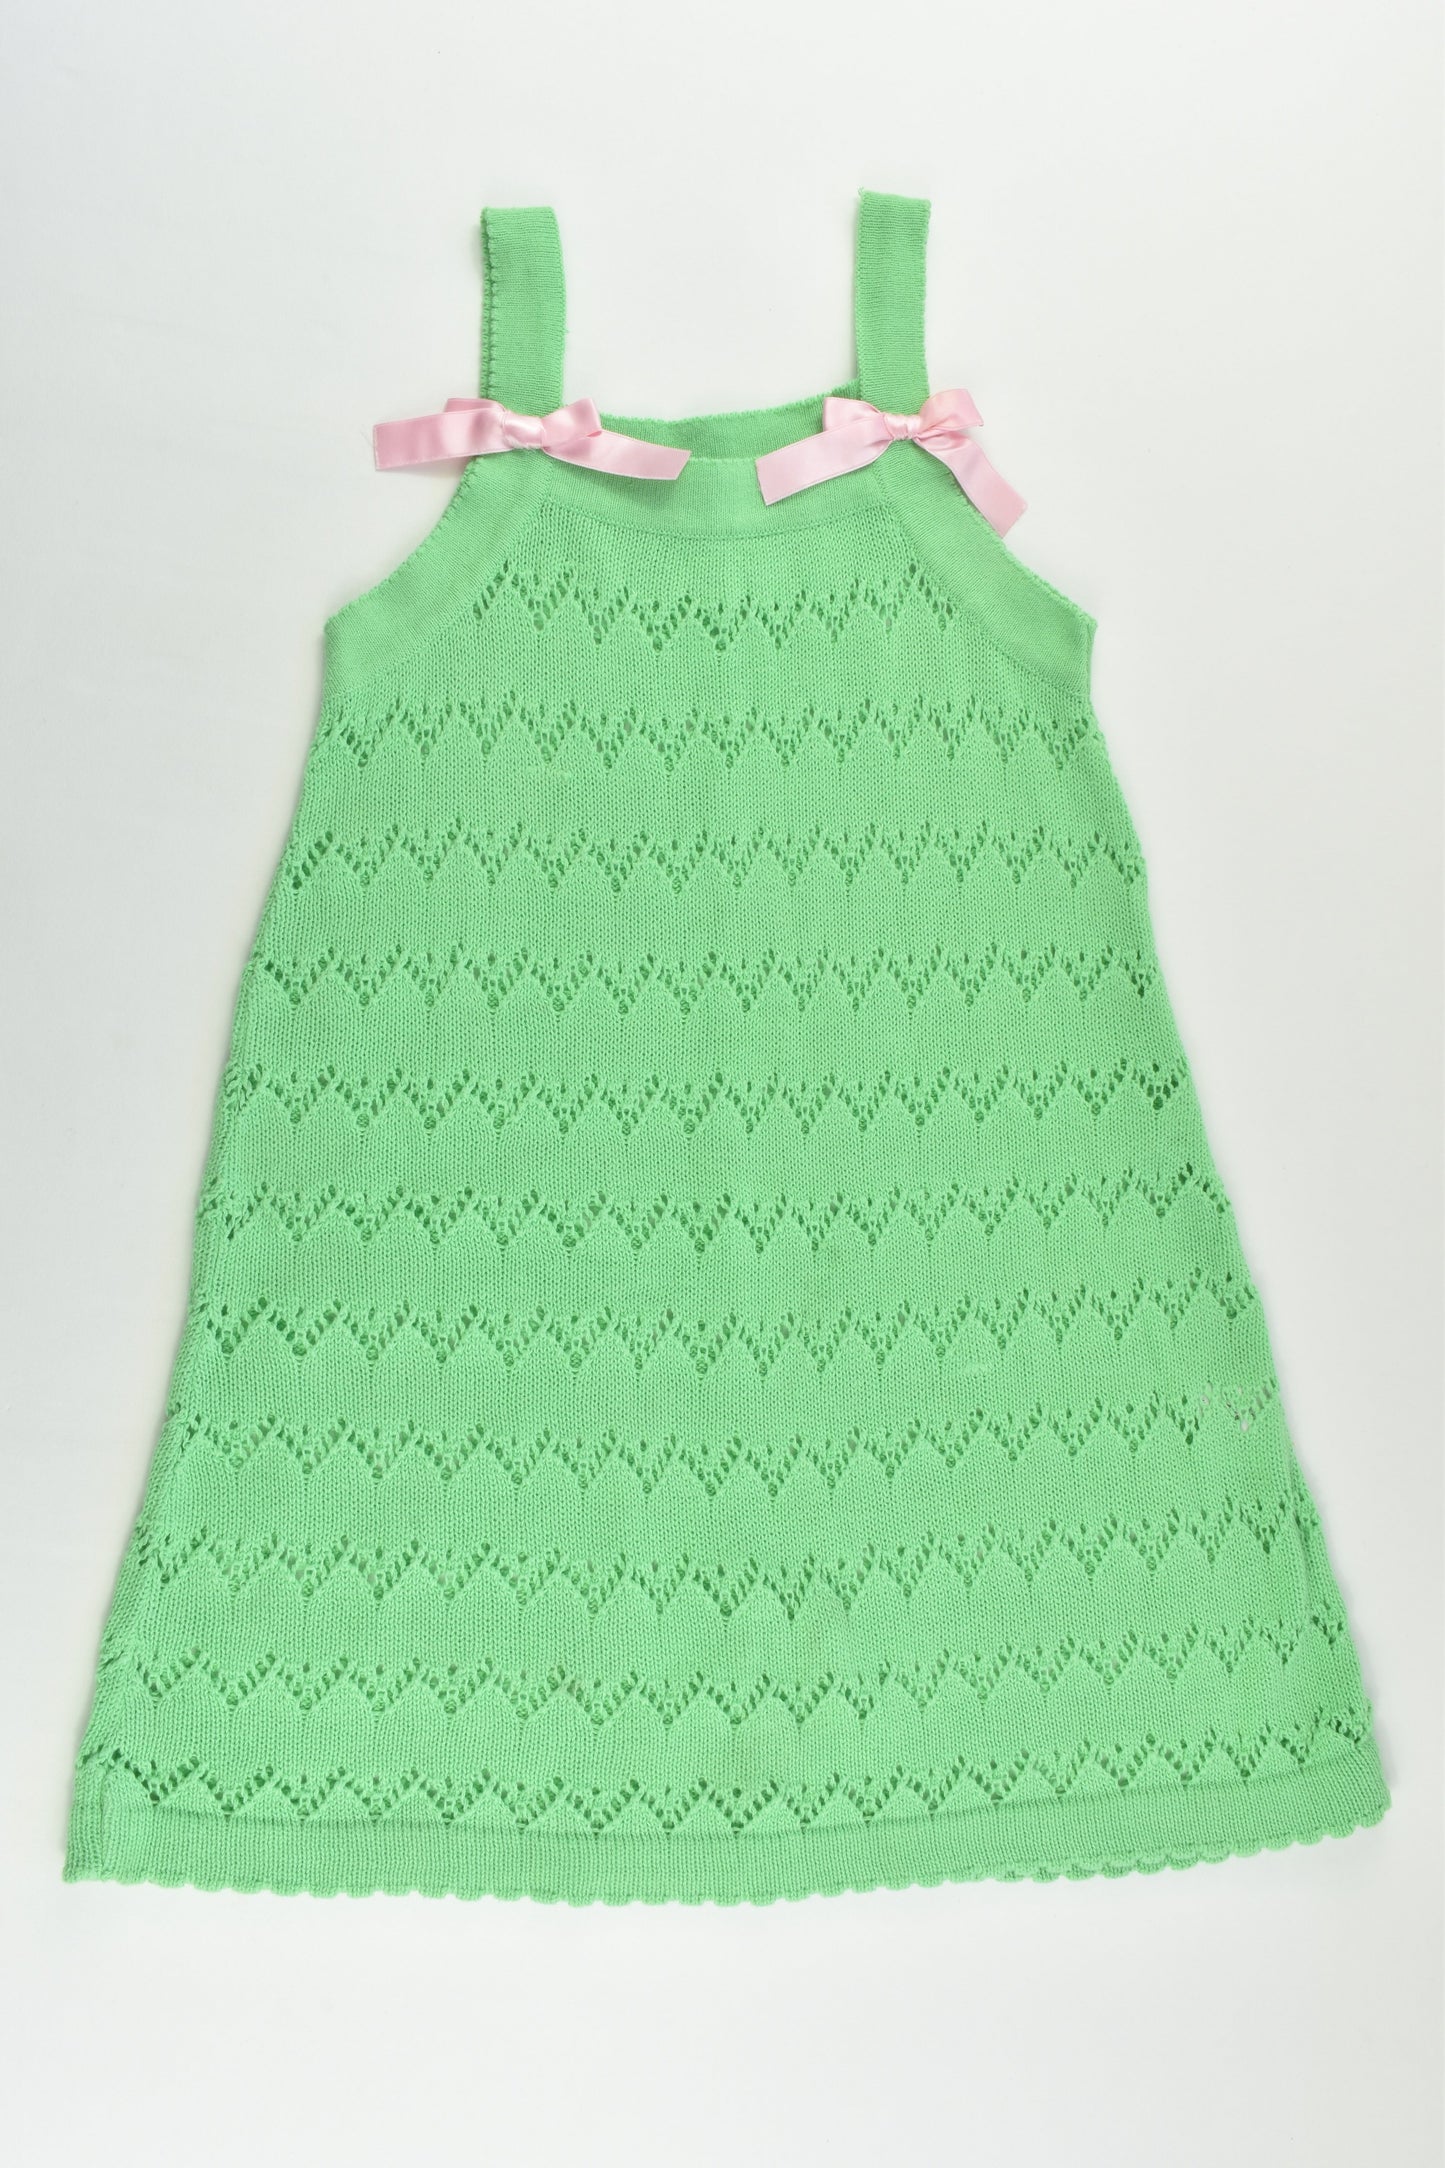 Muñequita (Spain) Size 4 Handmade Knitted Dress